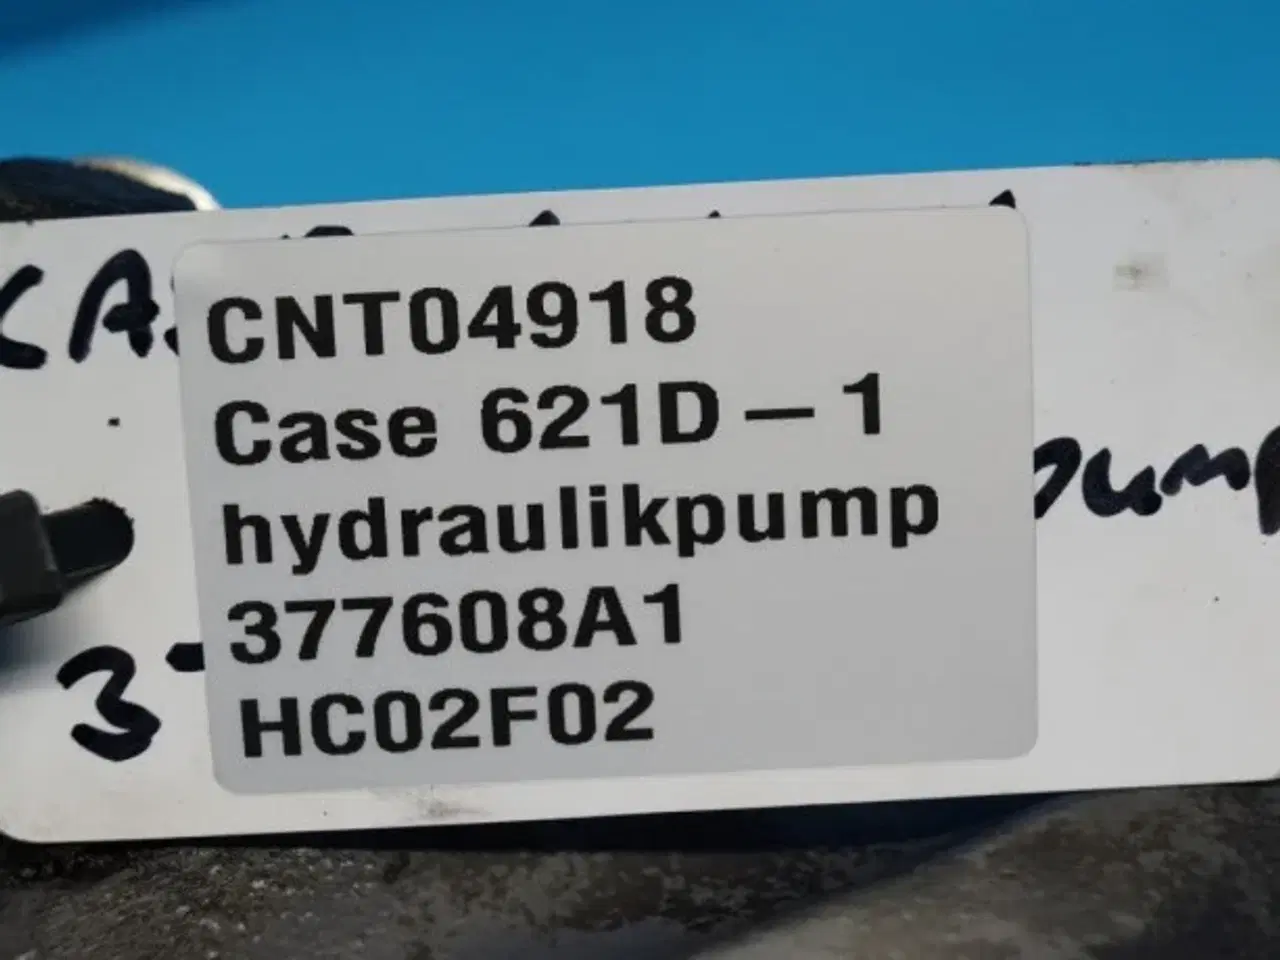 Billede 9 - Case 621D Hydraulikpumpe 377608A1